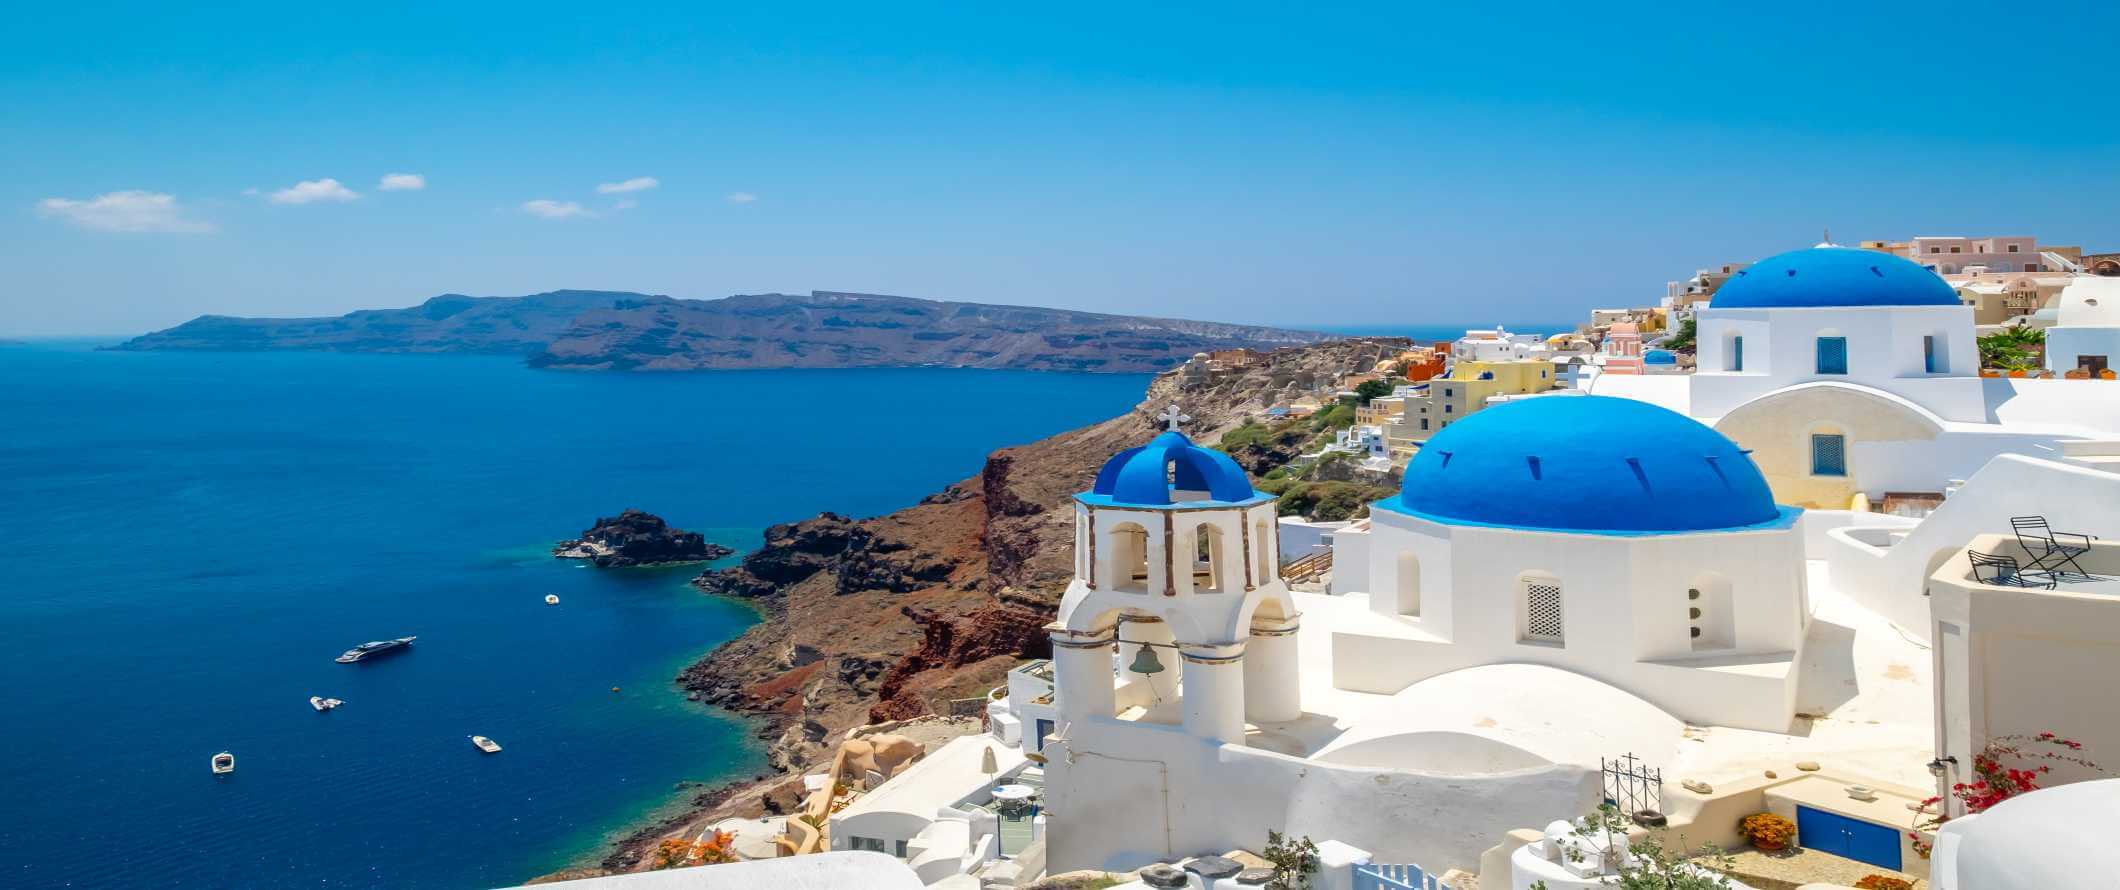 SANTORINI Travel Guide - Greece